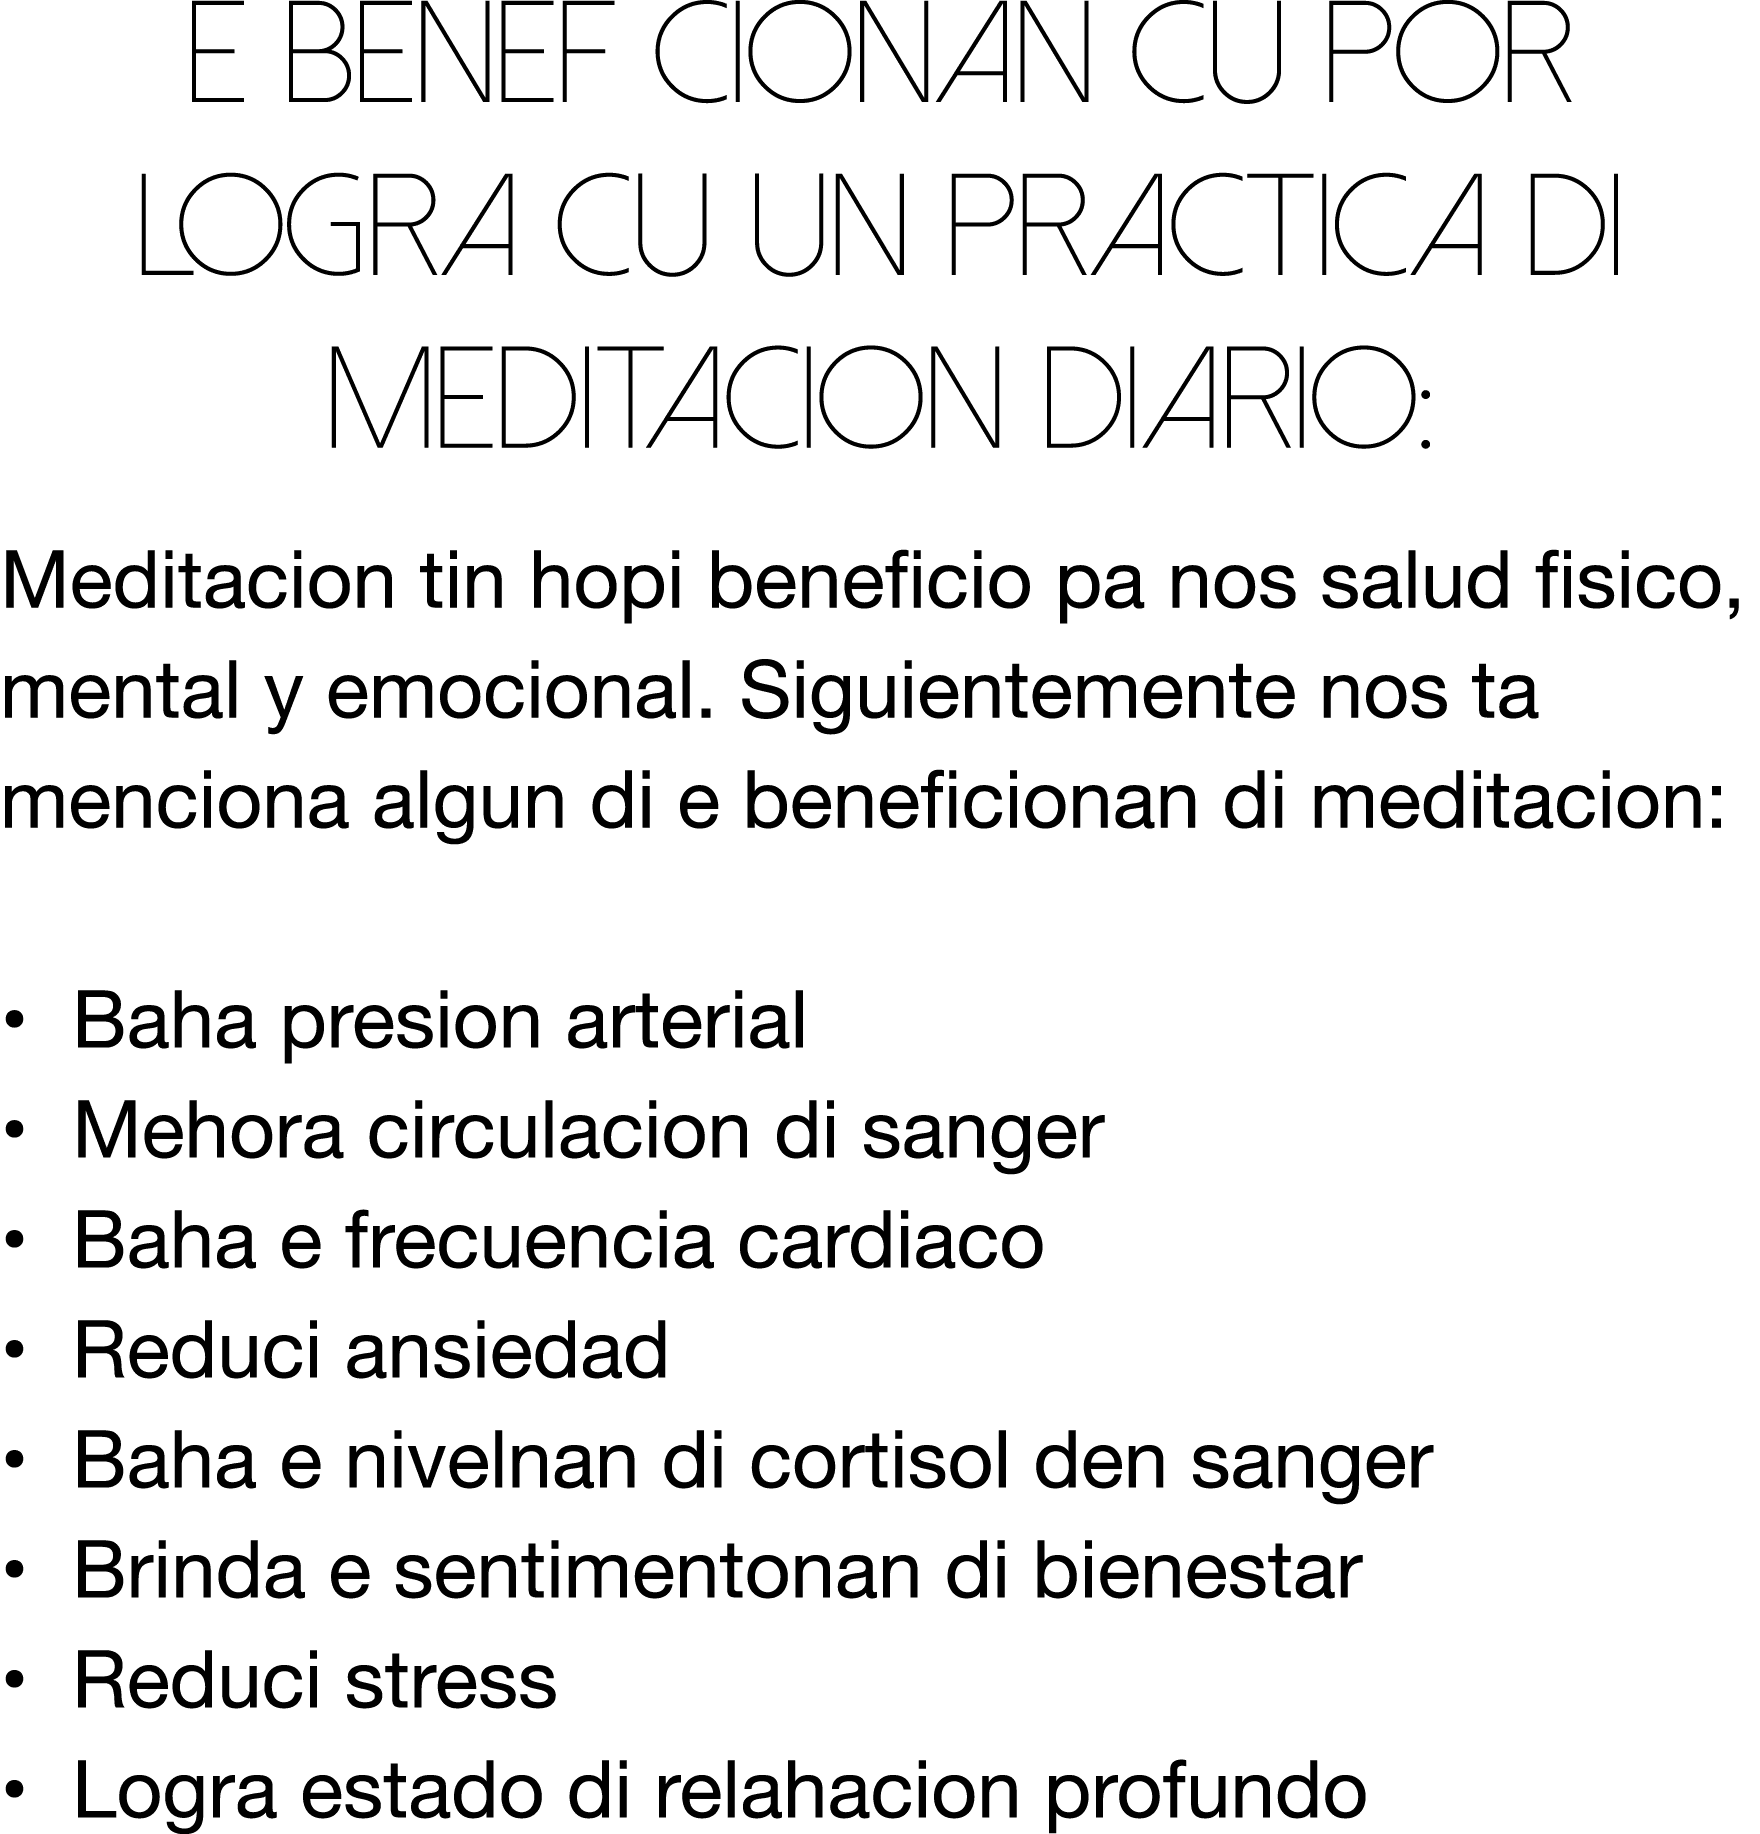 E benef cionan cu por logra cu un practica di meditacion diario: Meditacion tin hopi beneficio pa nos salud fisico, m   